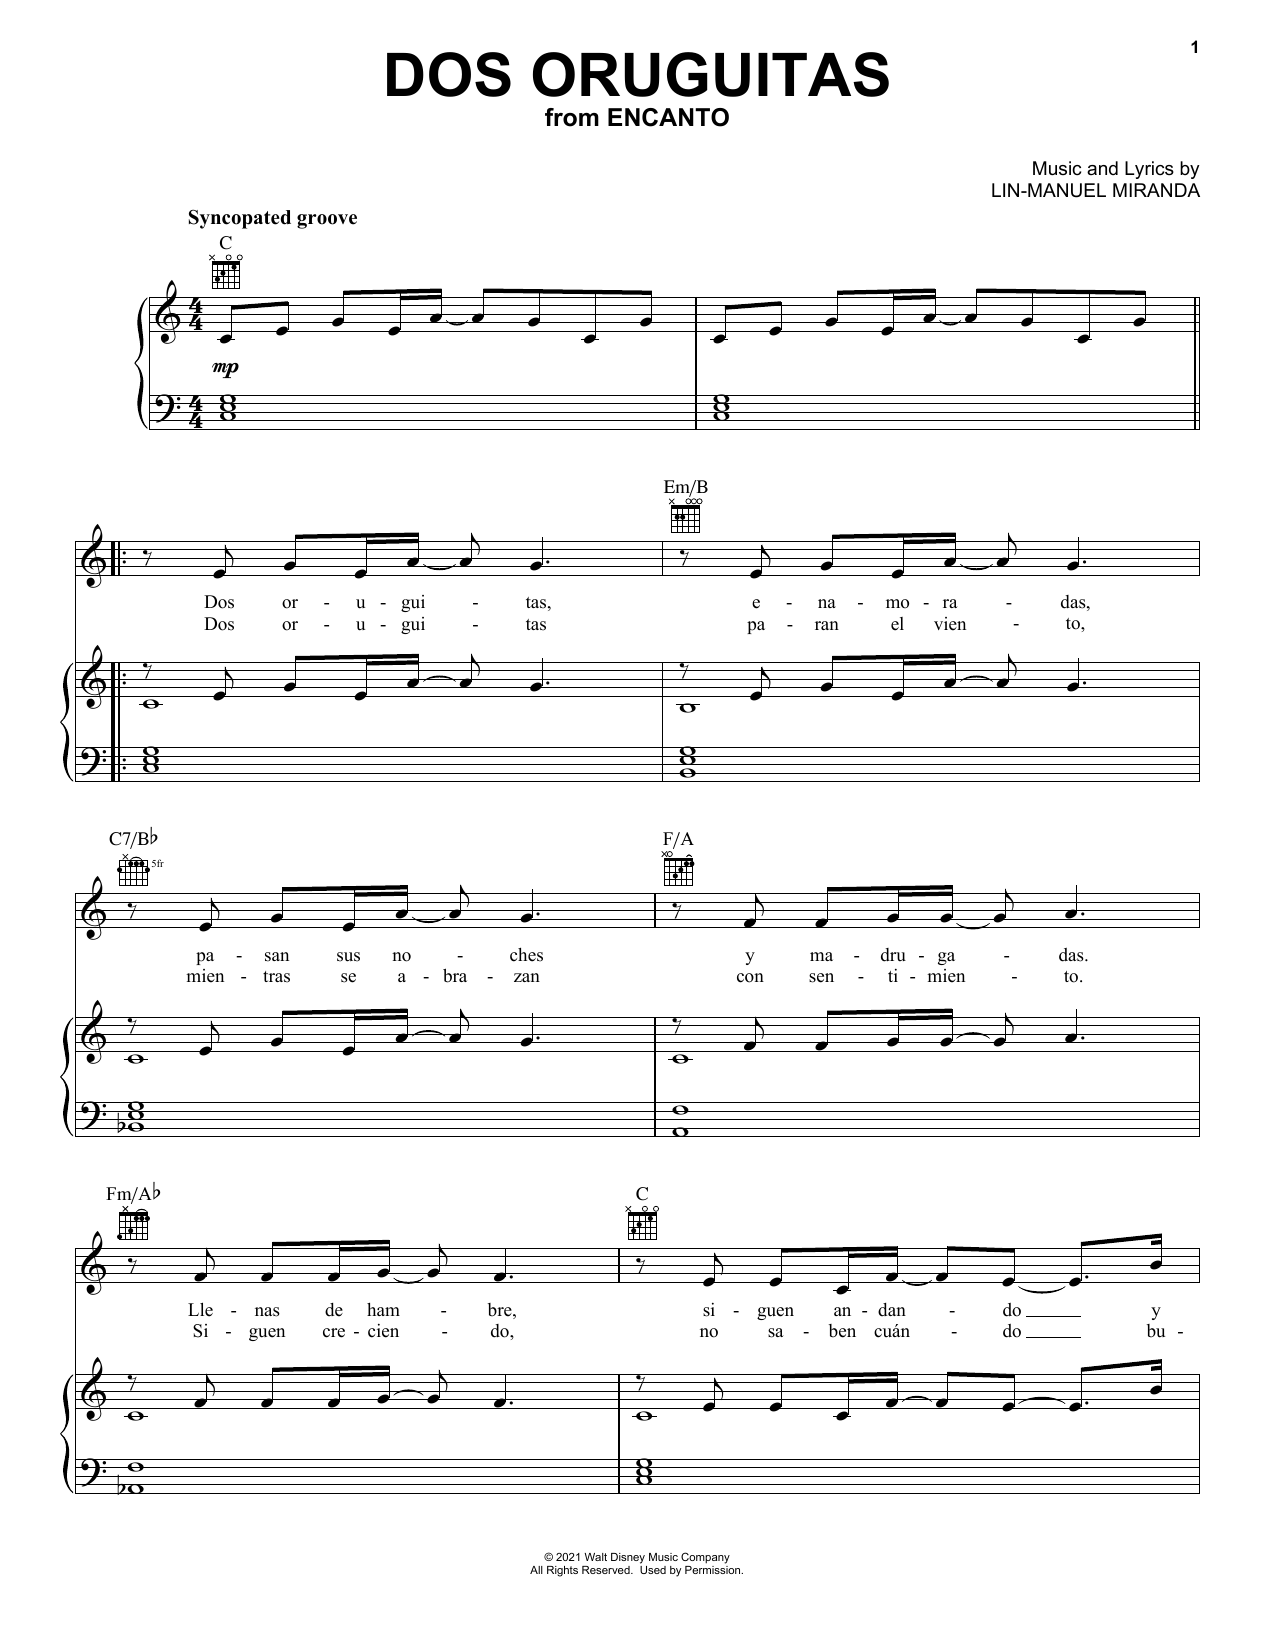 Lin-Manuel Miranda Dos Oruguitas (from Encanto) Sheet Music Notes & Chords for Piano Solo - Download or Print PDF